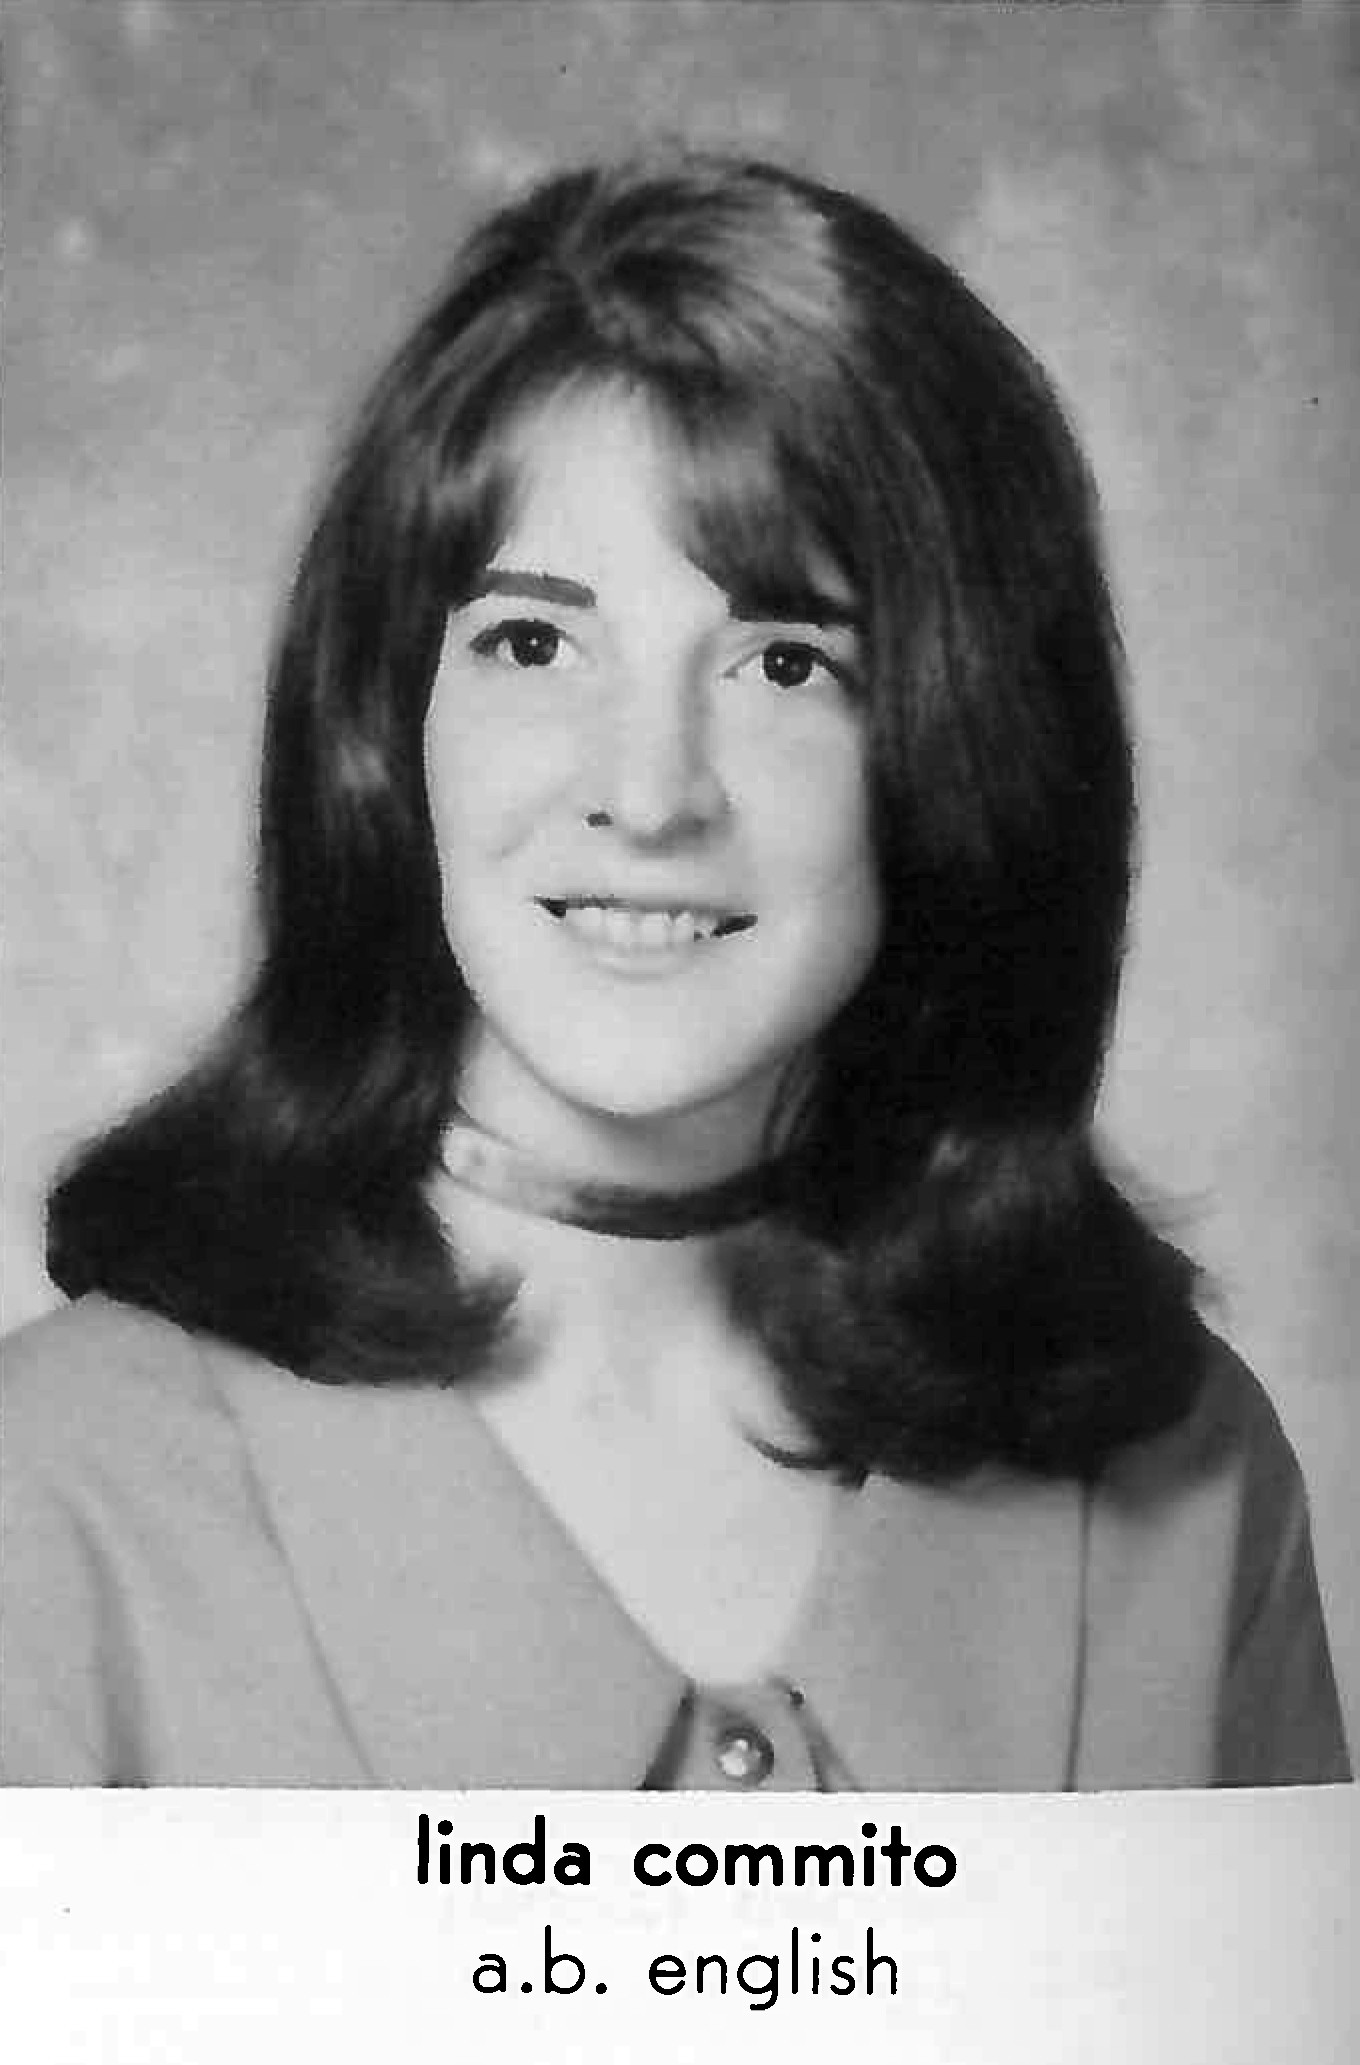 ACRES yearbook photo of Linda Commito ’72.